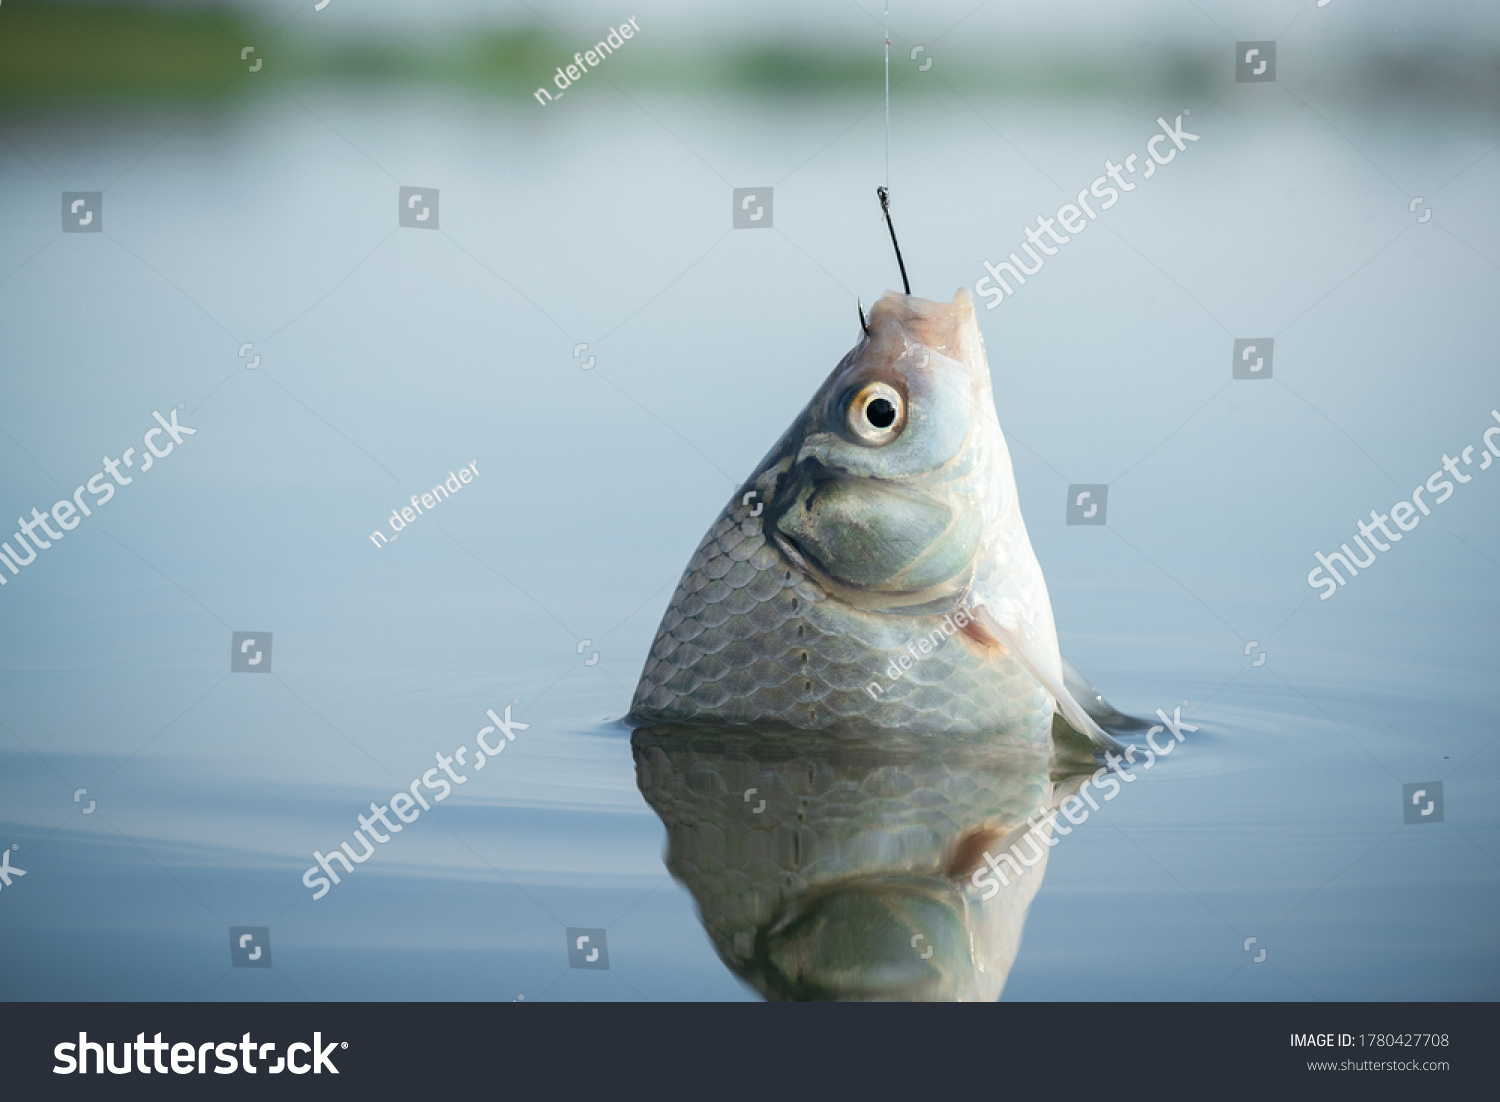 Crucian carp fish hanging on the fishing hook close up. #1780427708